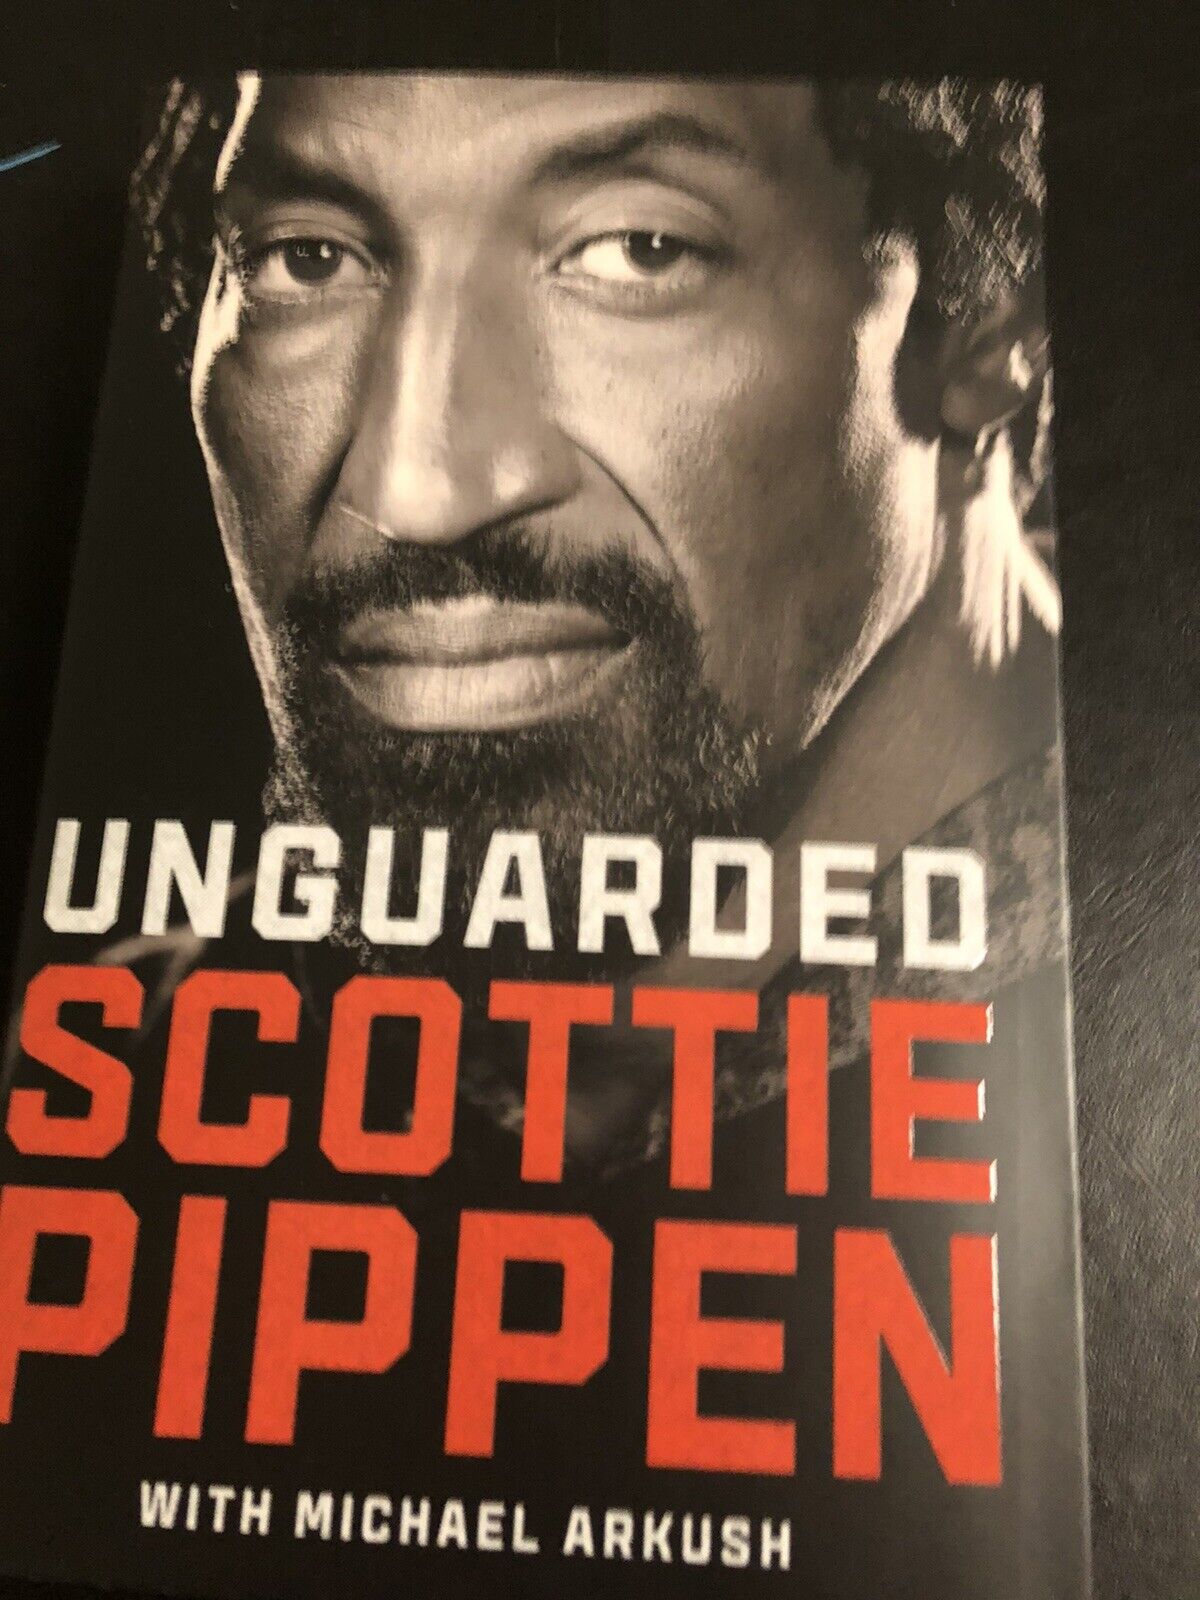 Autohraphed Scottie Pippen Book Unguarded Jsa Certified Signed